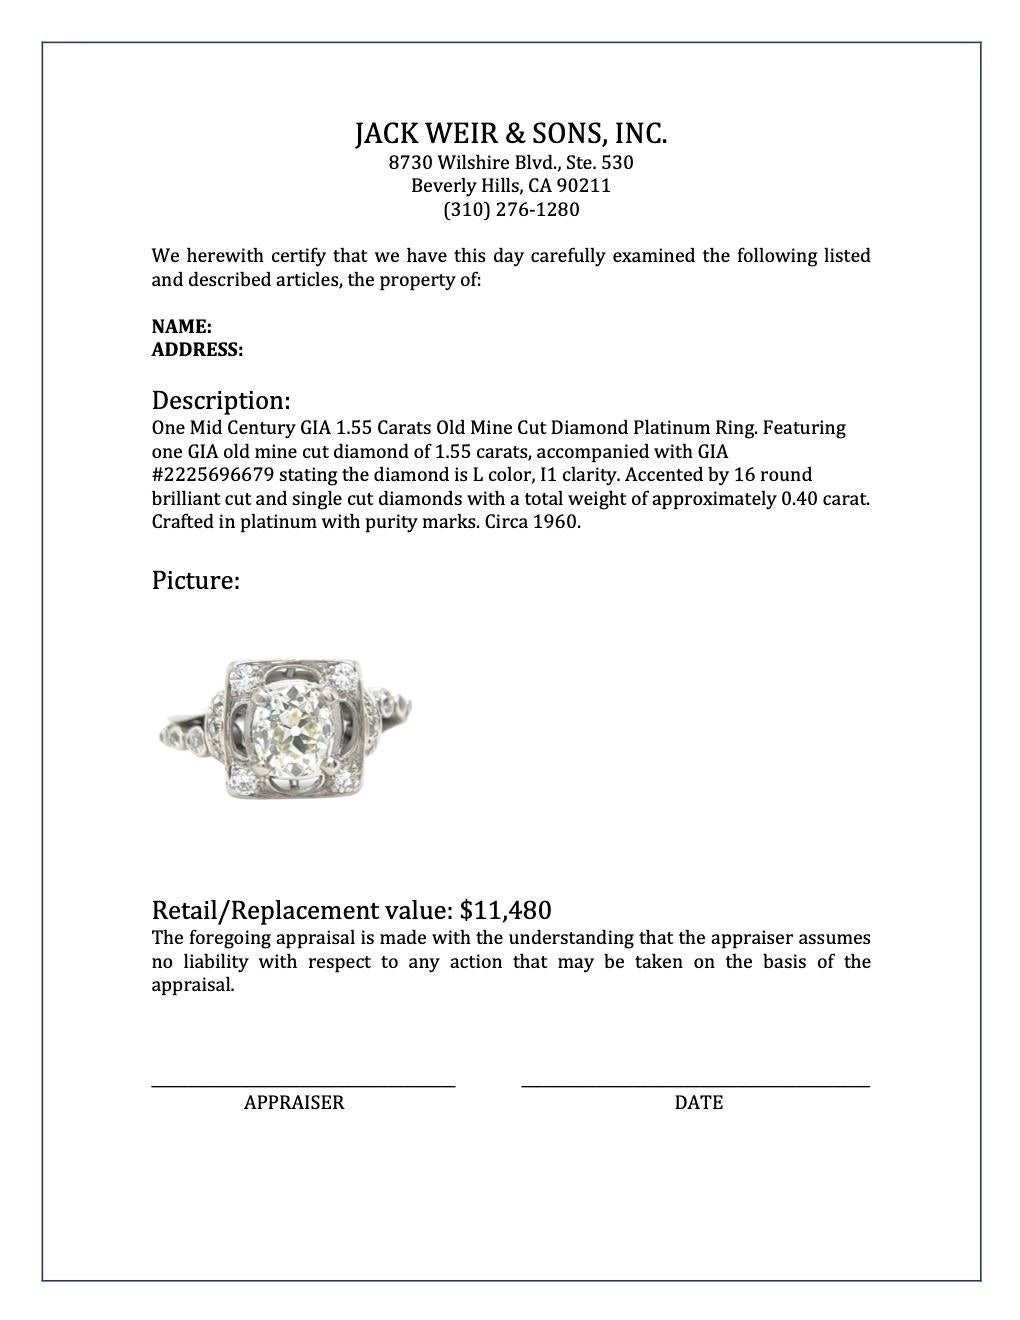 Mid Century GIA 1.55 Carats Old Mine Cut Diamond Platinum Ring 3